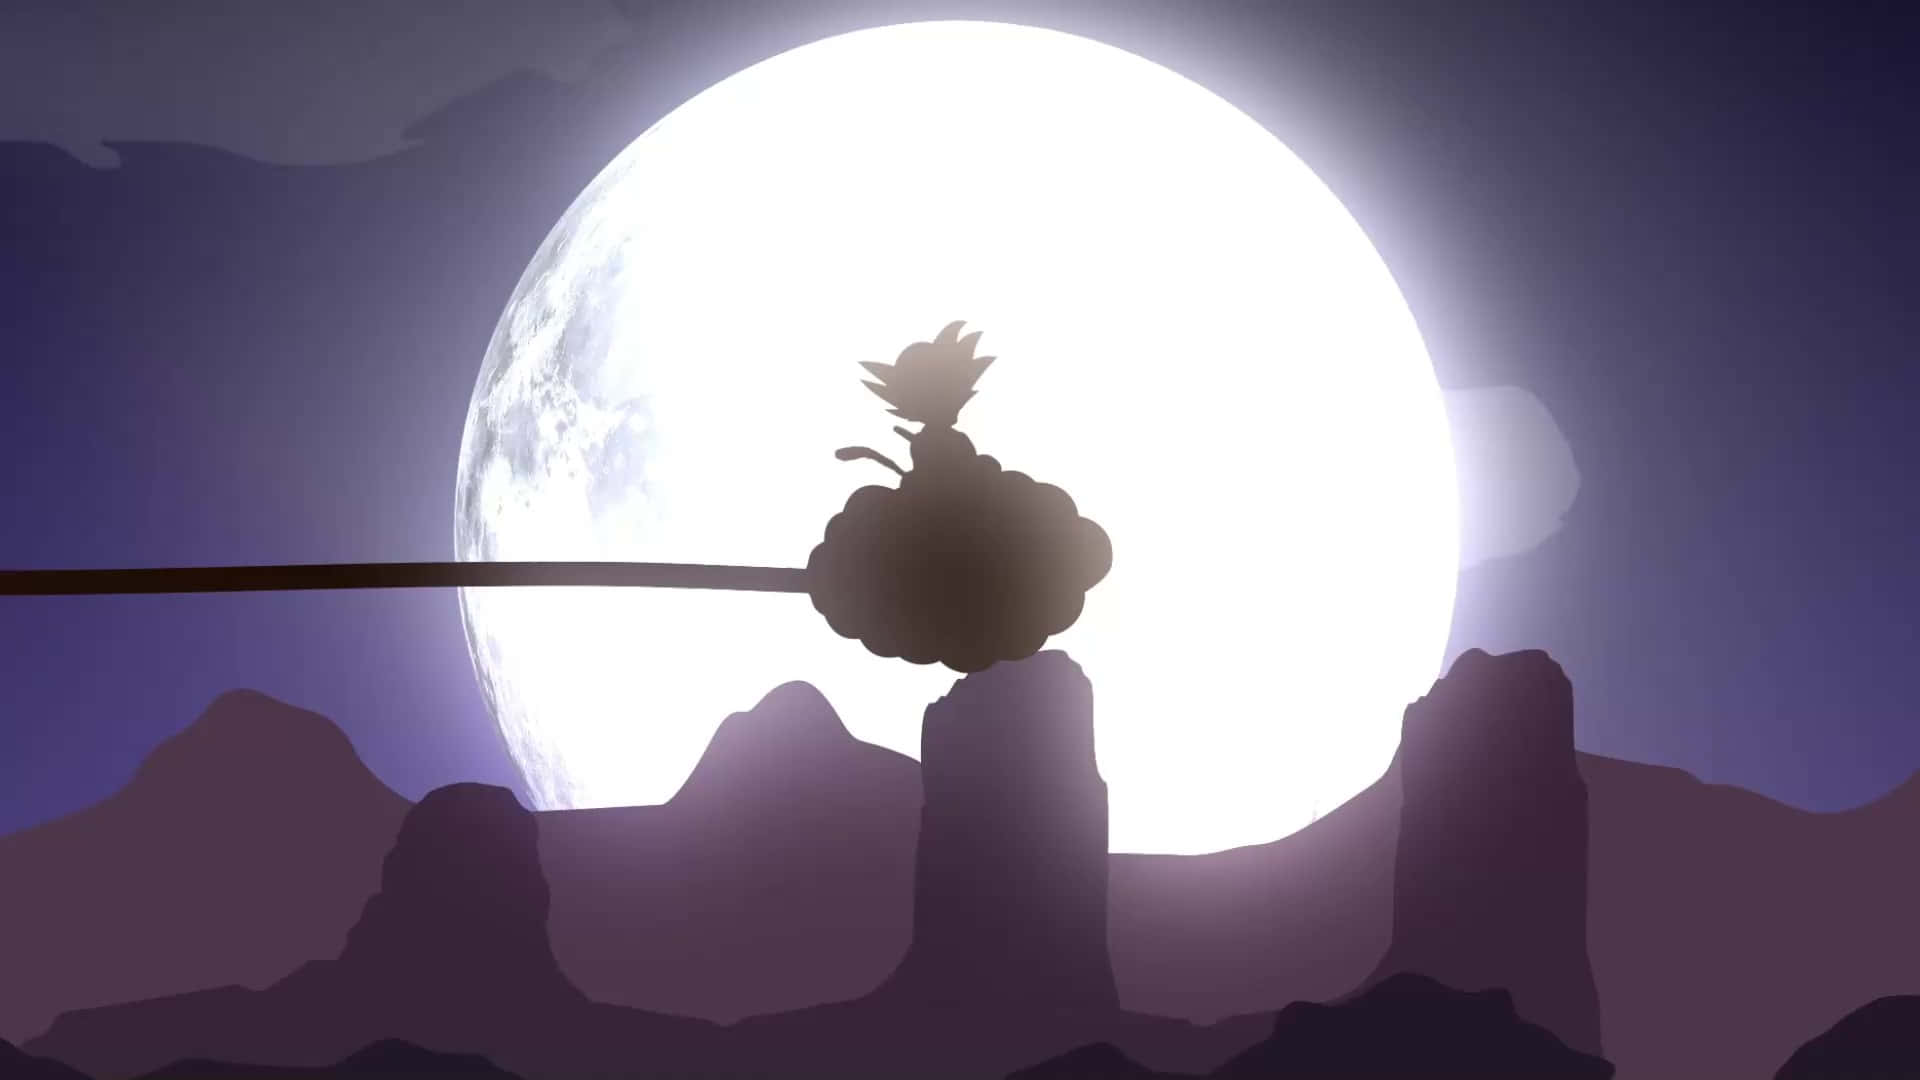 Kid Goku On Cloud By The Moon Silhouette Wallpaper